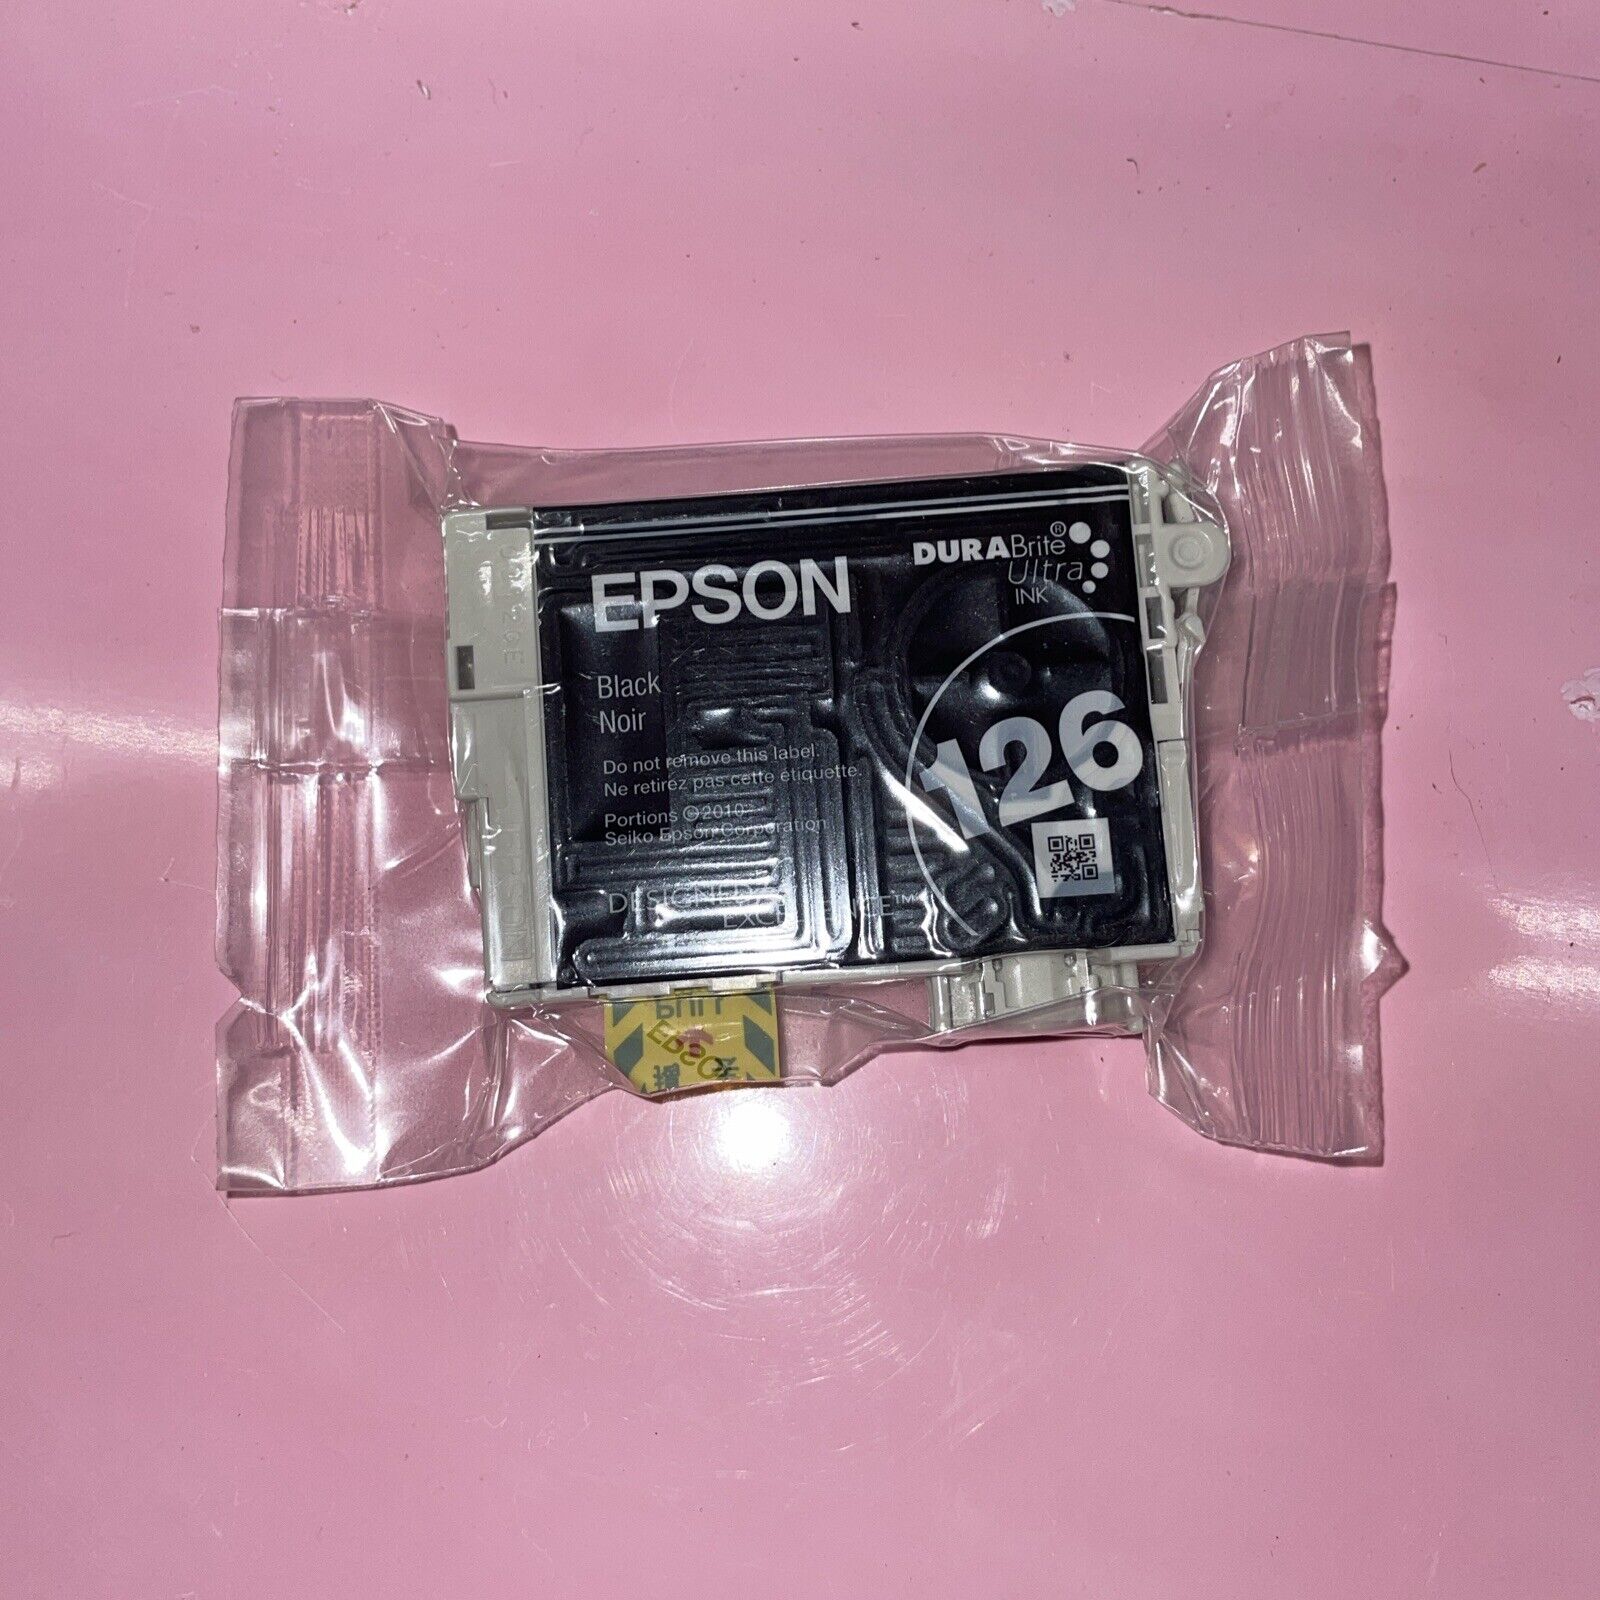 New Sealed Epson 126 black Dura Brite Ultra Ink Cartridge.